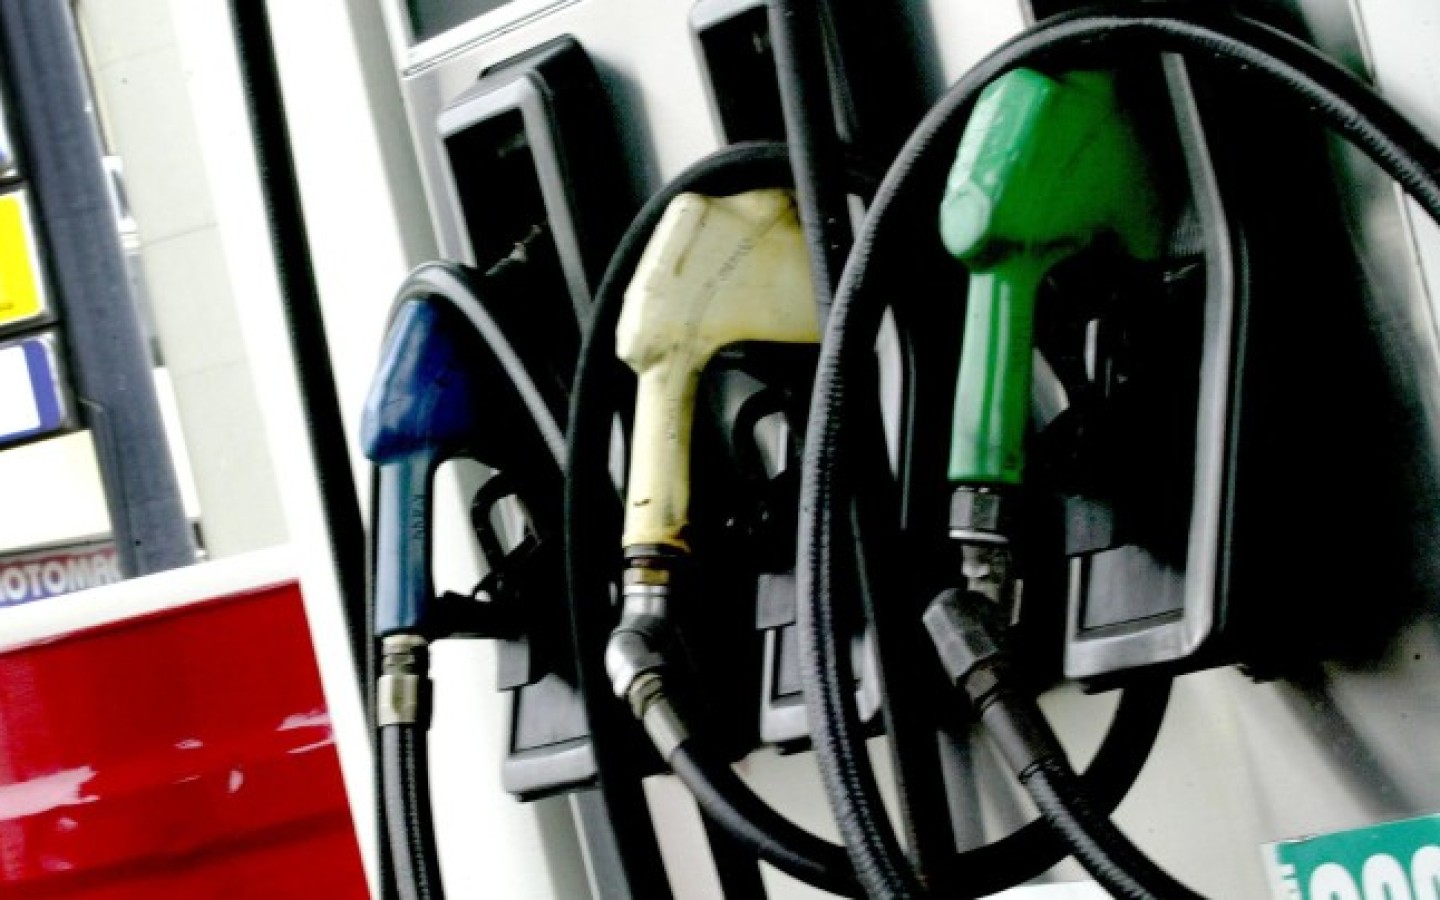 Aresep podrá actualizar precio de combustibles, pese a reclamo ante Sala IV